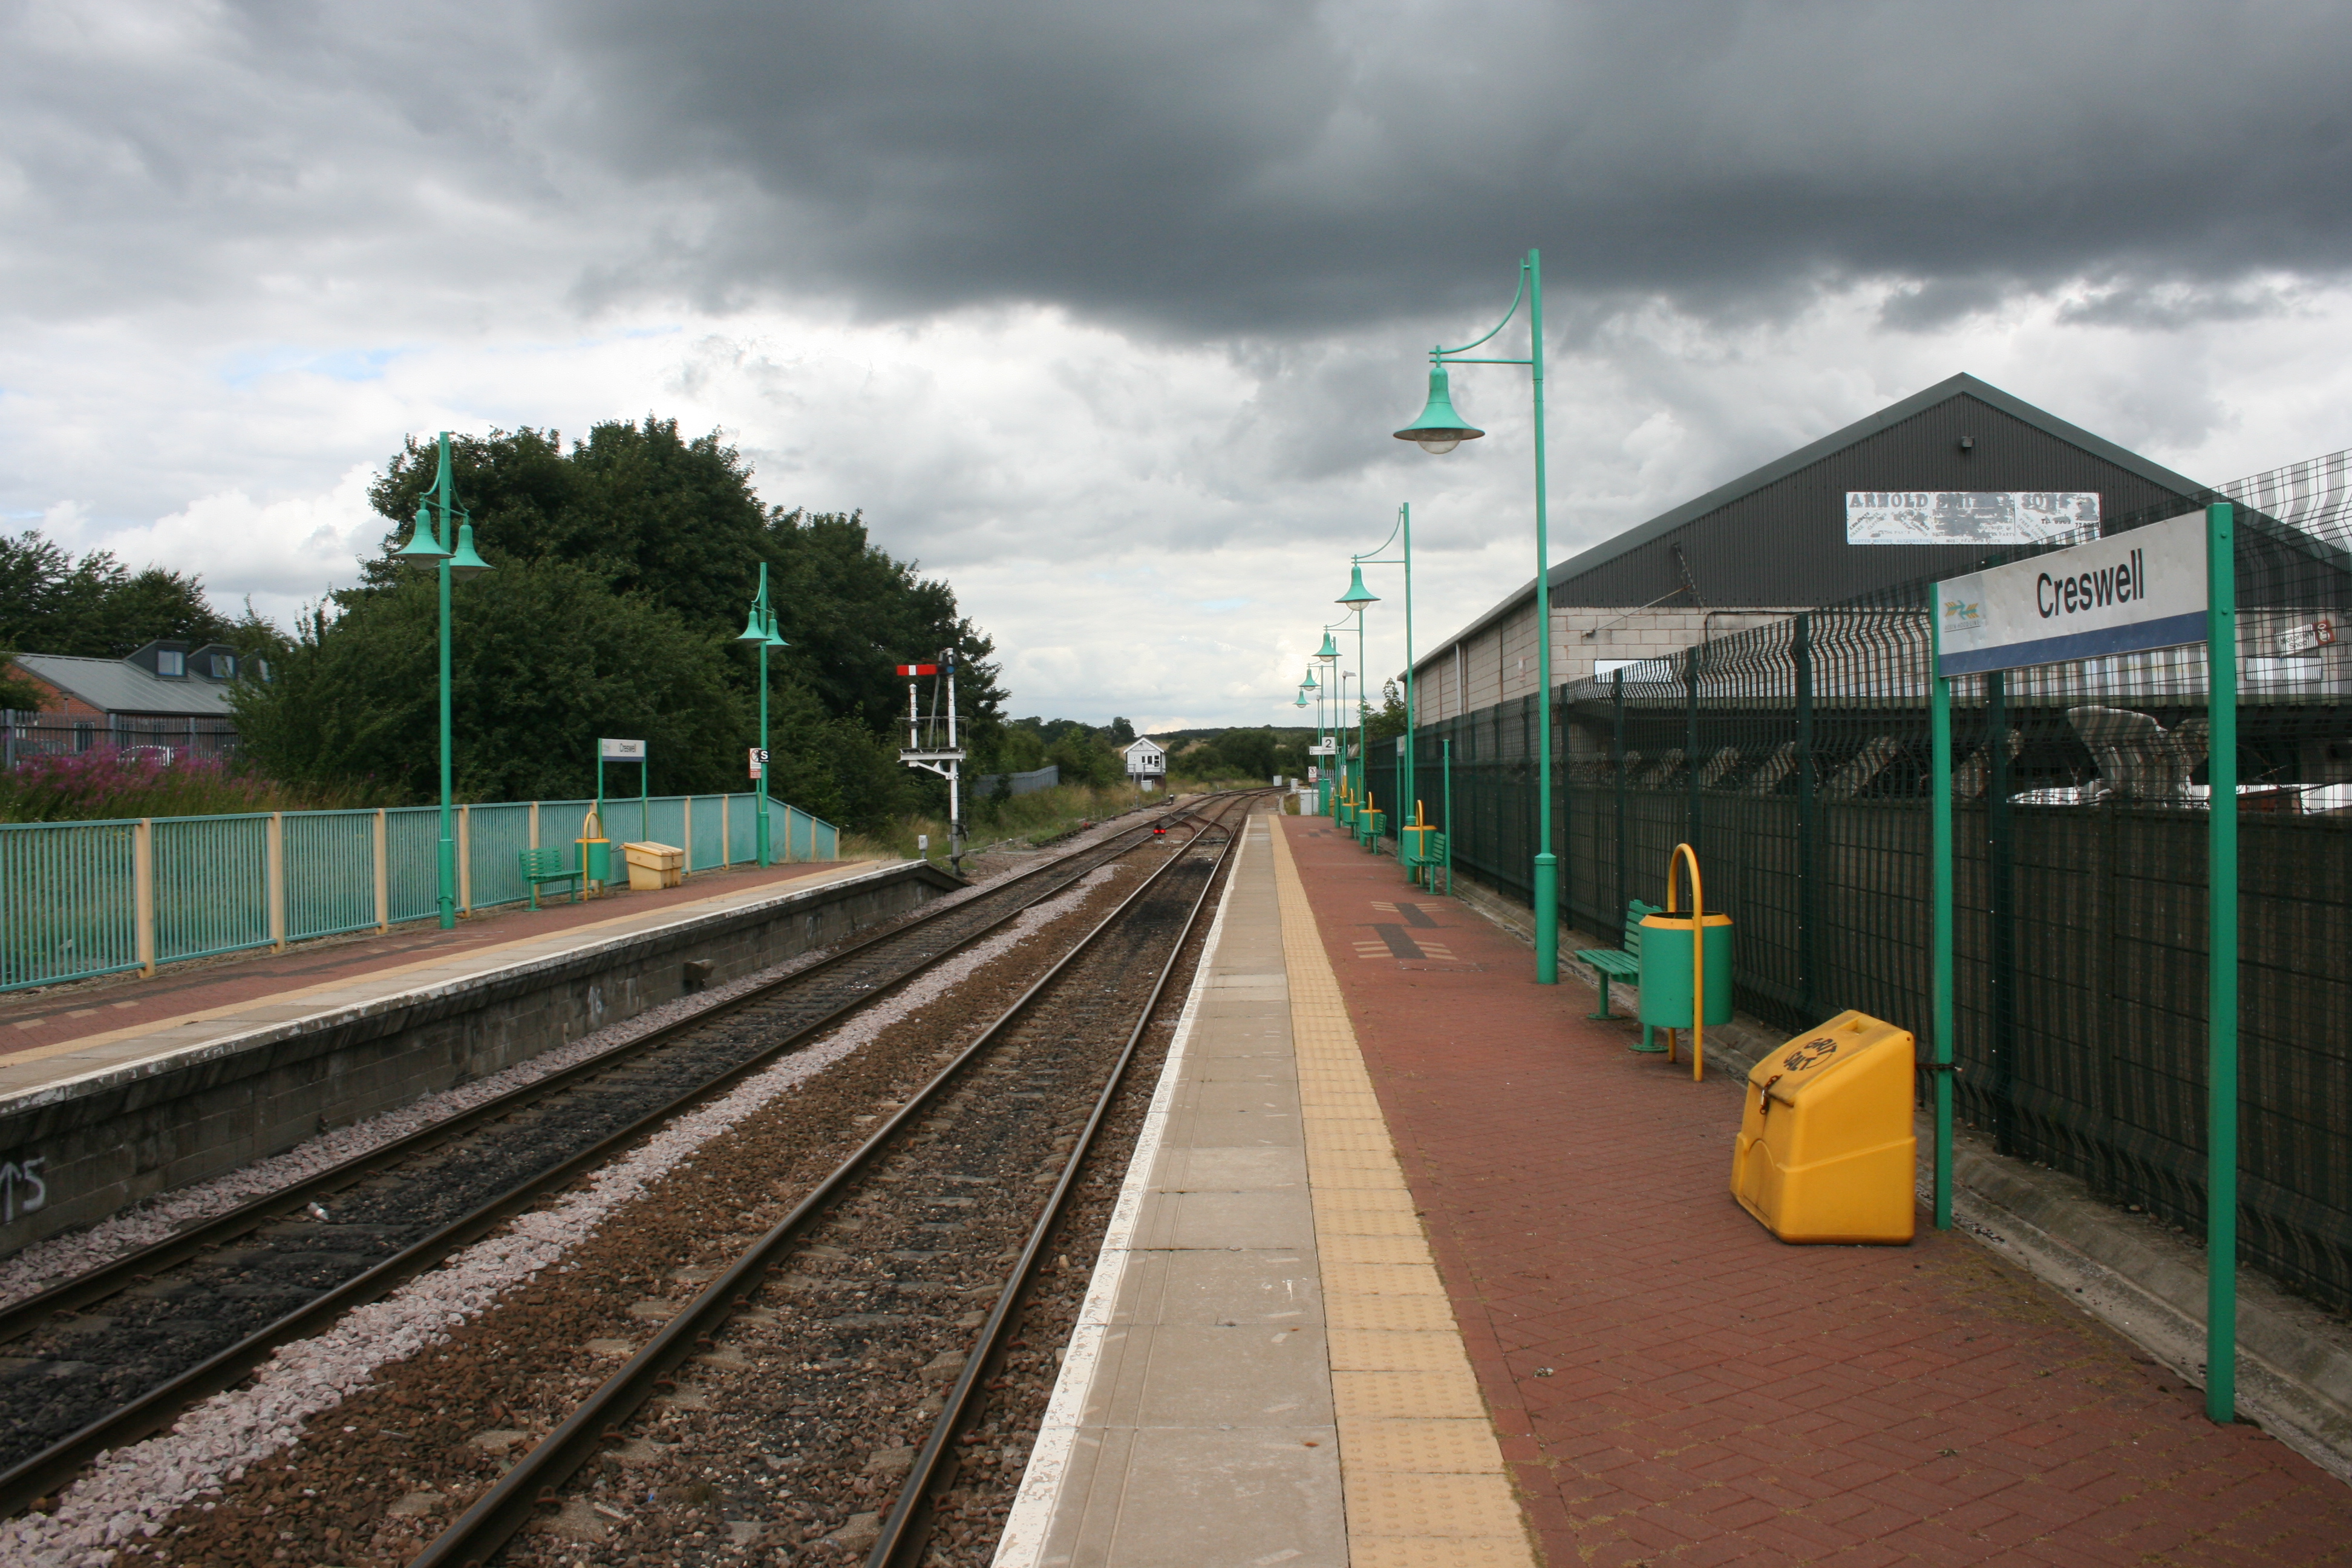 Creswell railway station